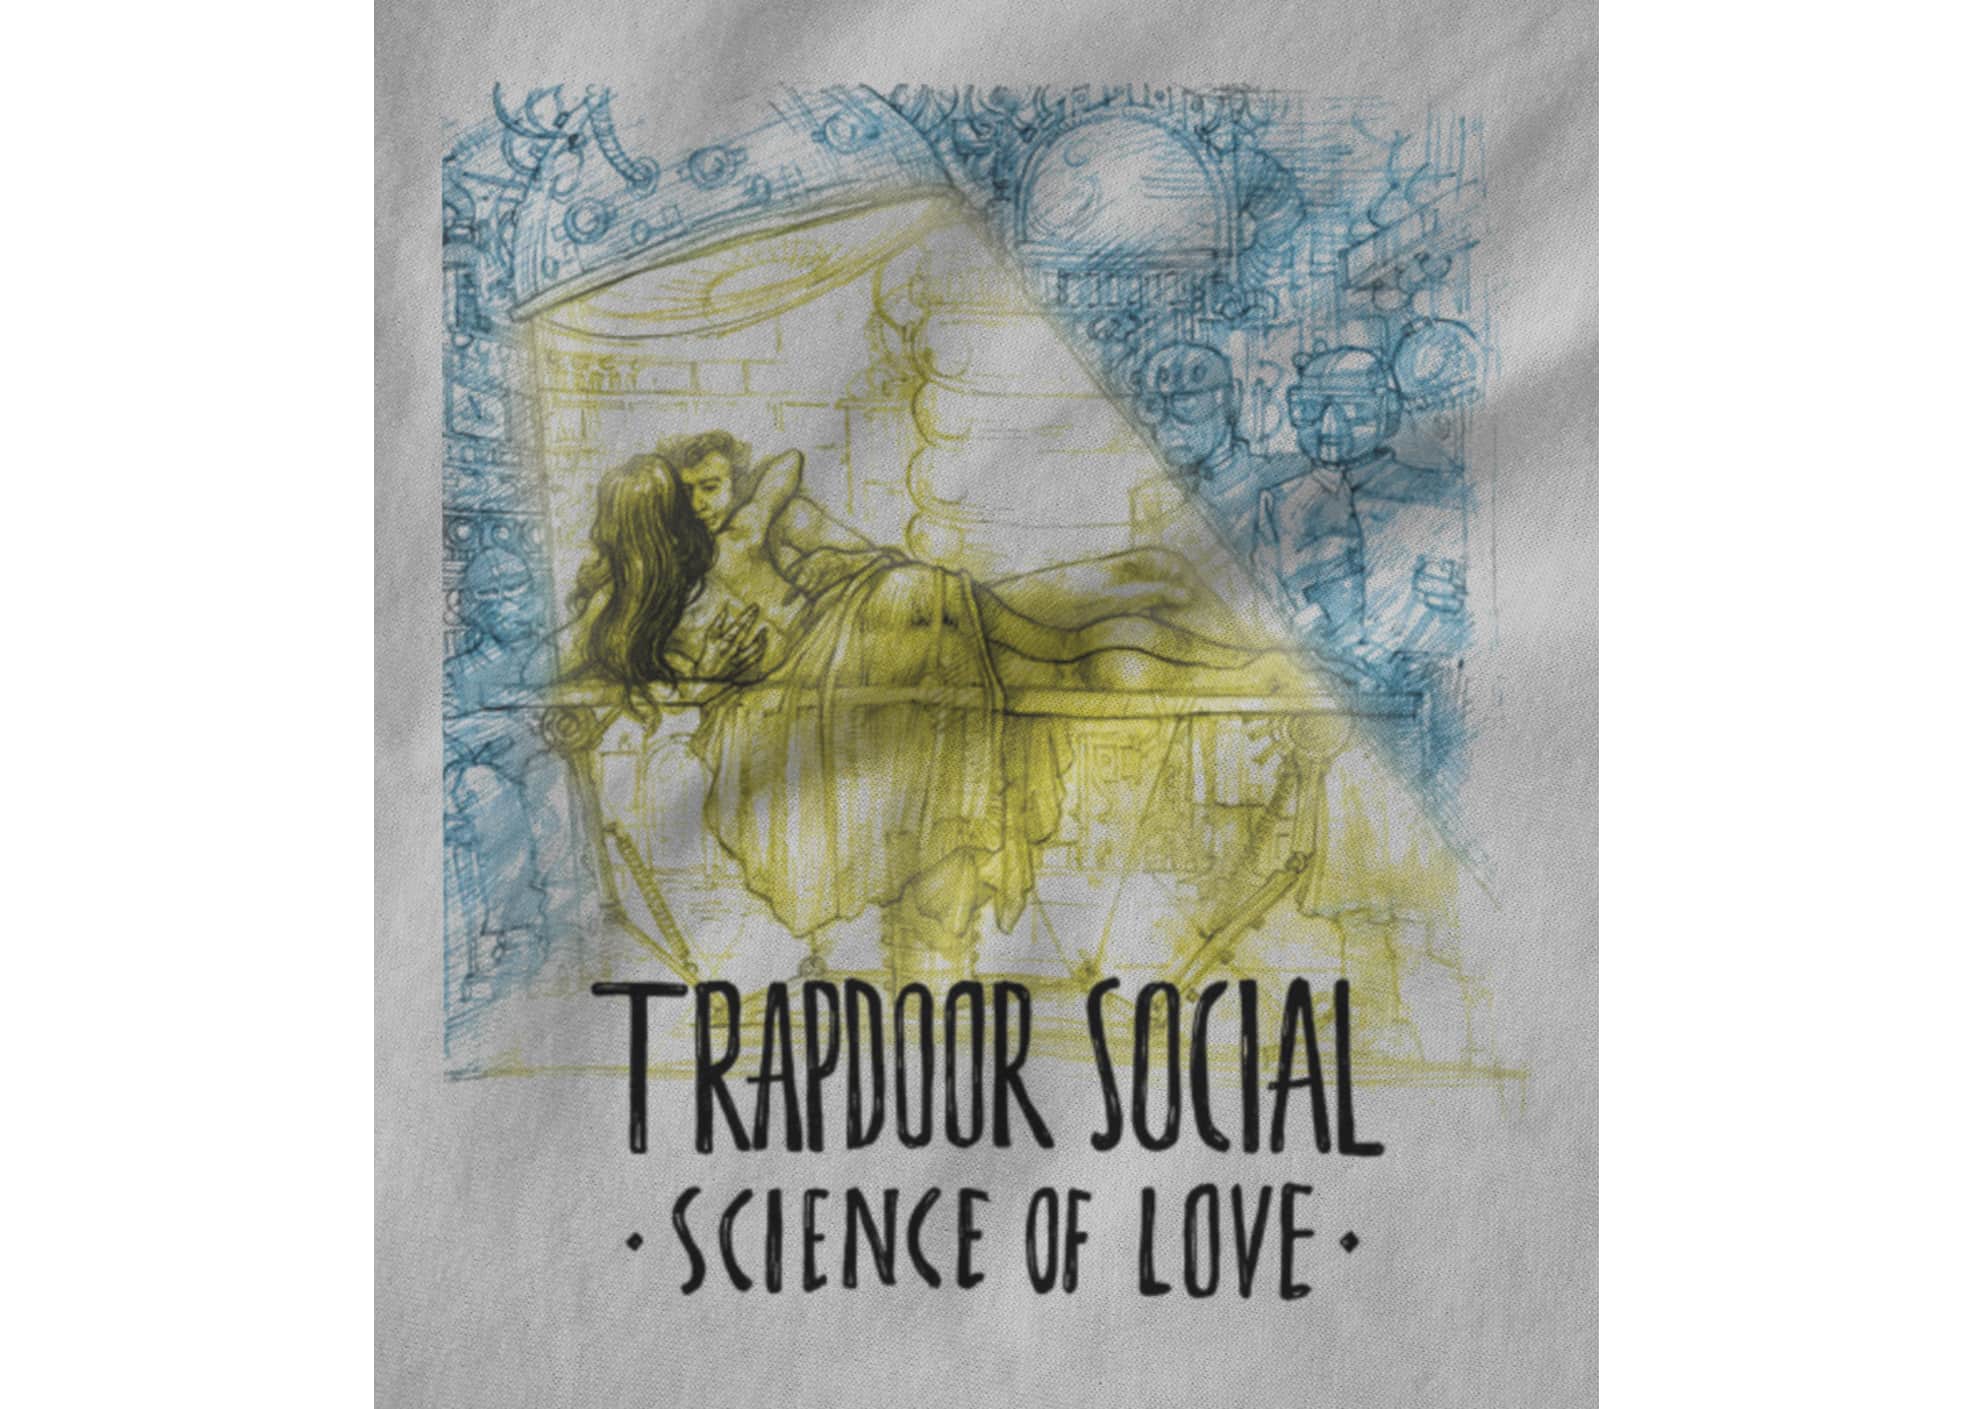 Trapdoor social science of love artwork 1481009854